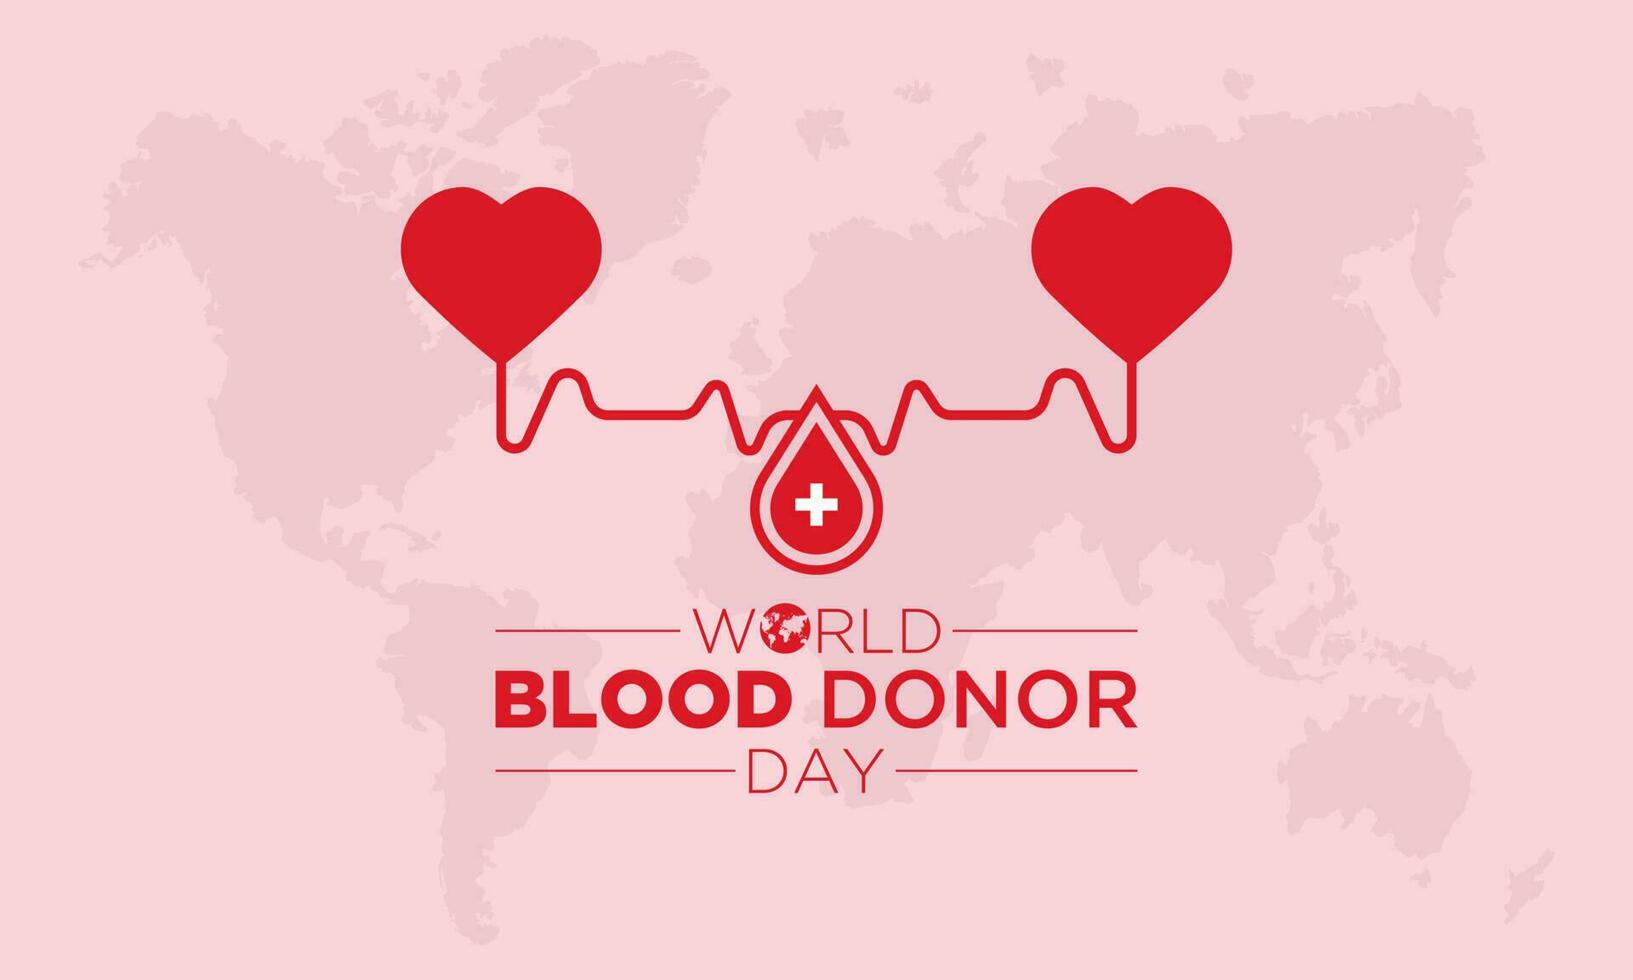 Welt Blut Spender Tag ist beobachtete jeder Jahr im Juni 14. spenden Blut Konzept Illustration Hintergrund zum Welt Blut Spender Tag. Vektor Illustration.